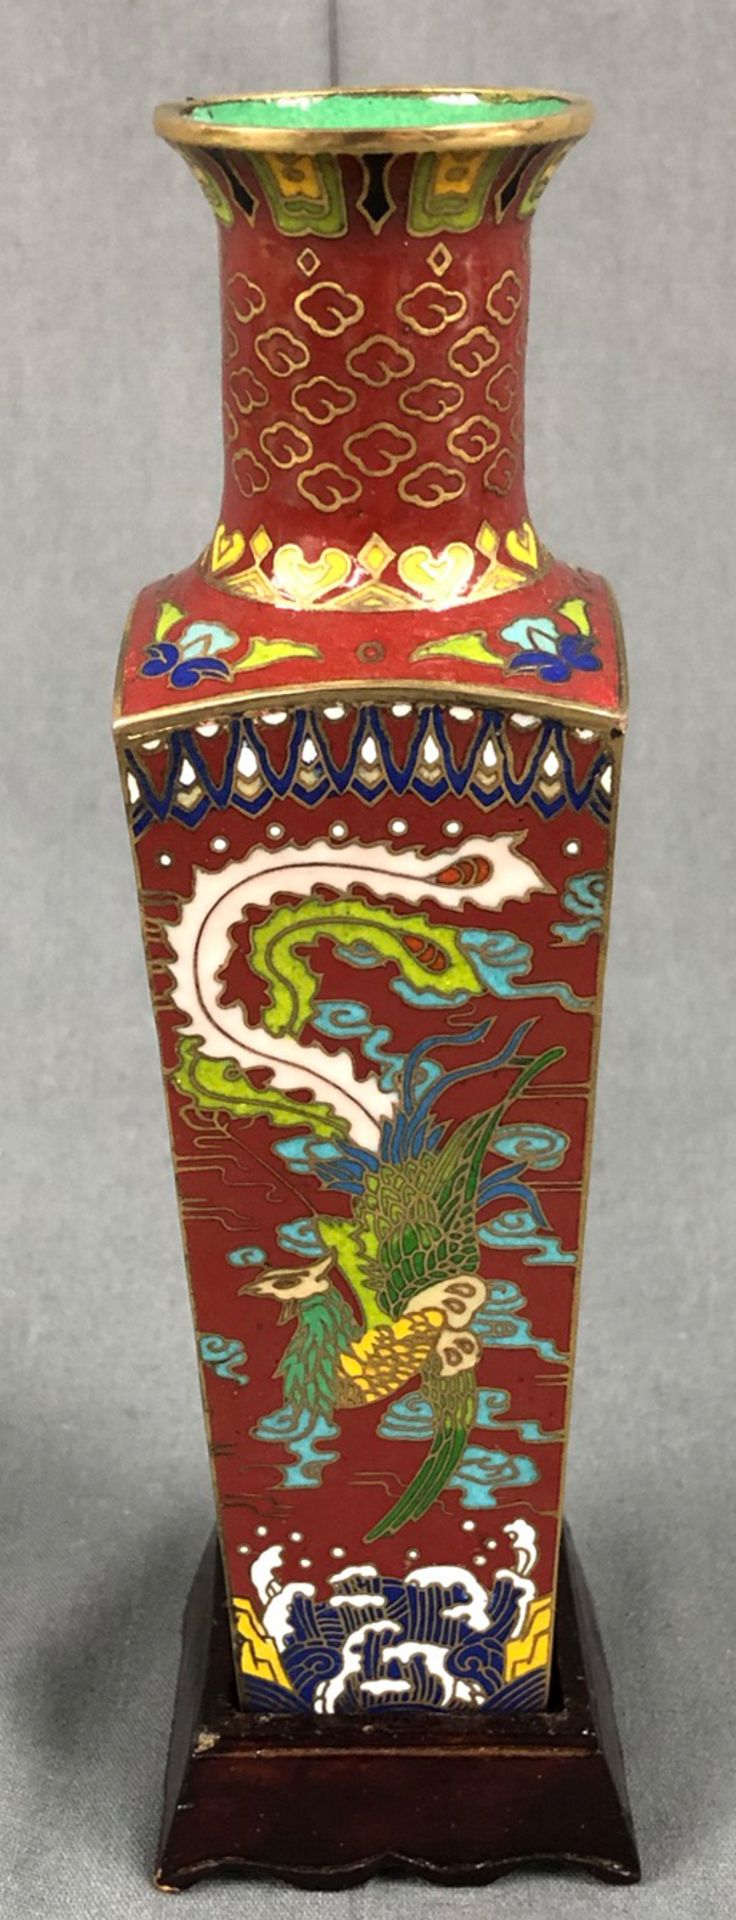 Cloisonne vase Japan / China. Simurgh over waves. 17 cm high. - Image 9 of 14